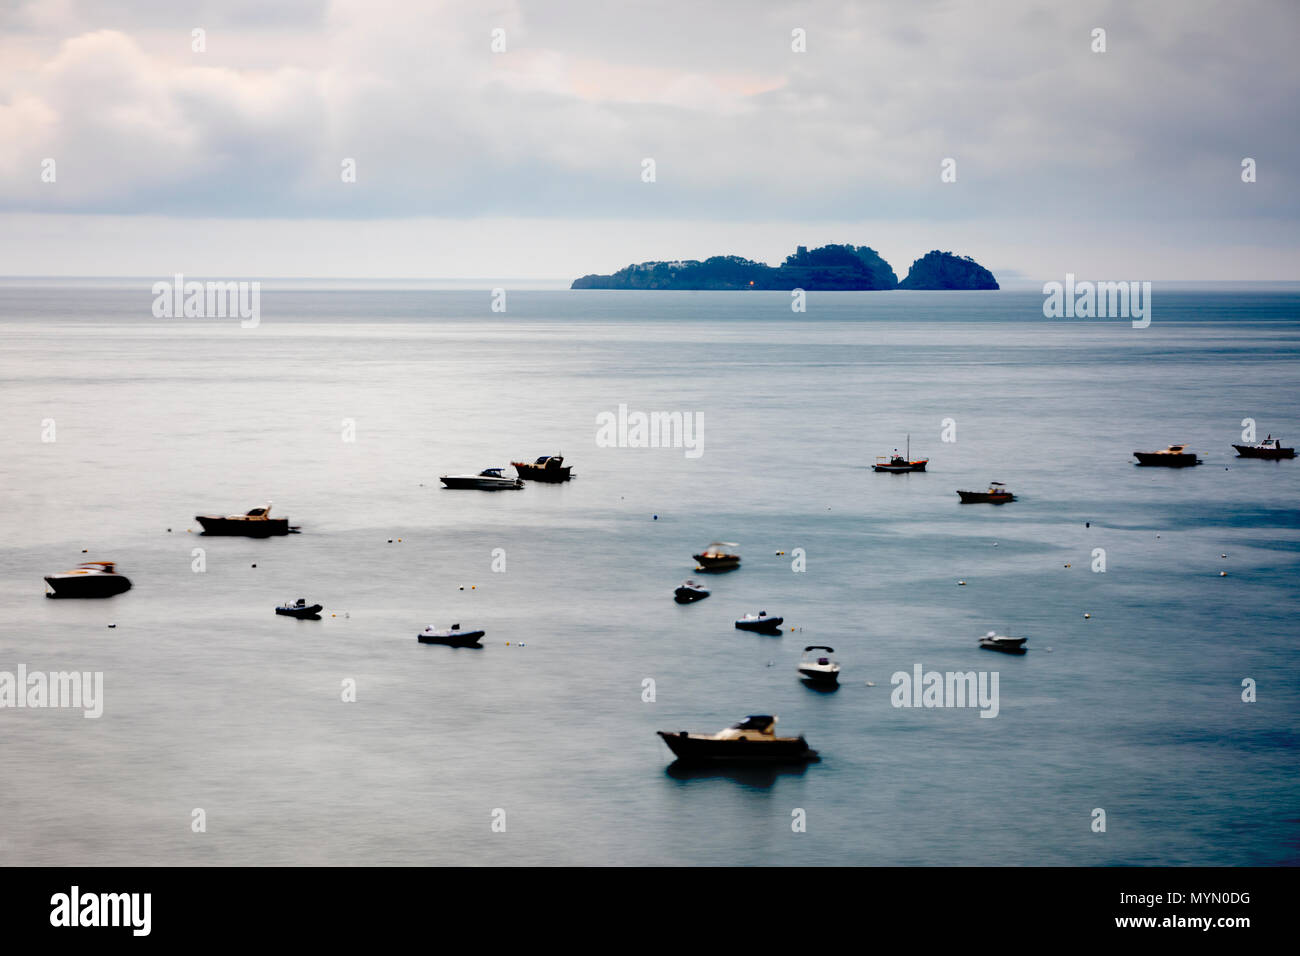 Time exposure of boats on sea and offshore islands of Gallo Lungo, Positano, The Amalfi Coast, Campania, Italy, Europe Stock Photo